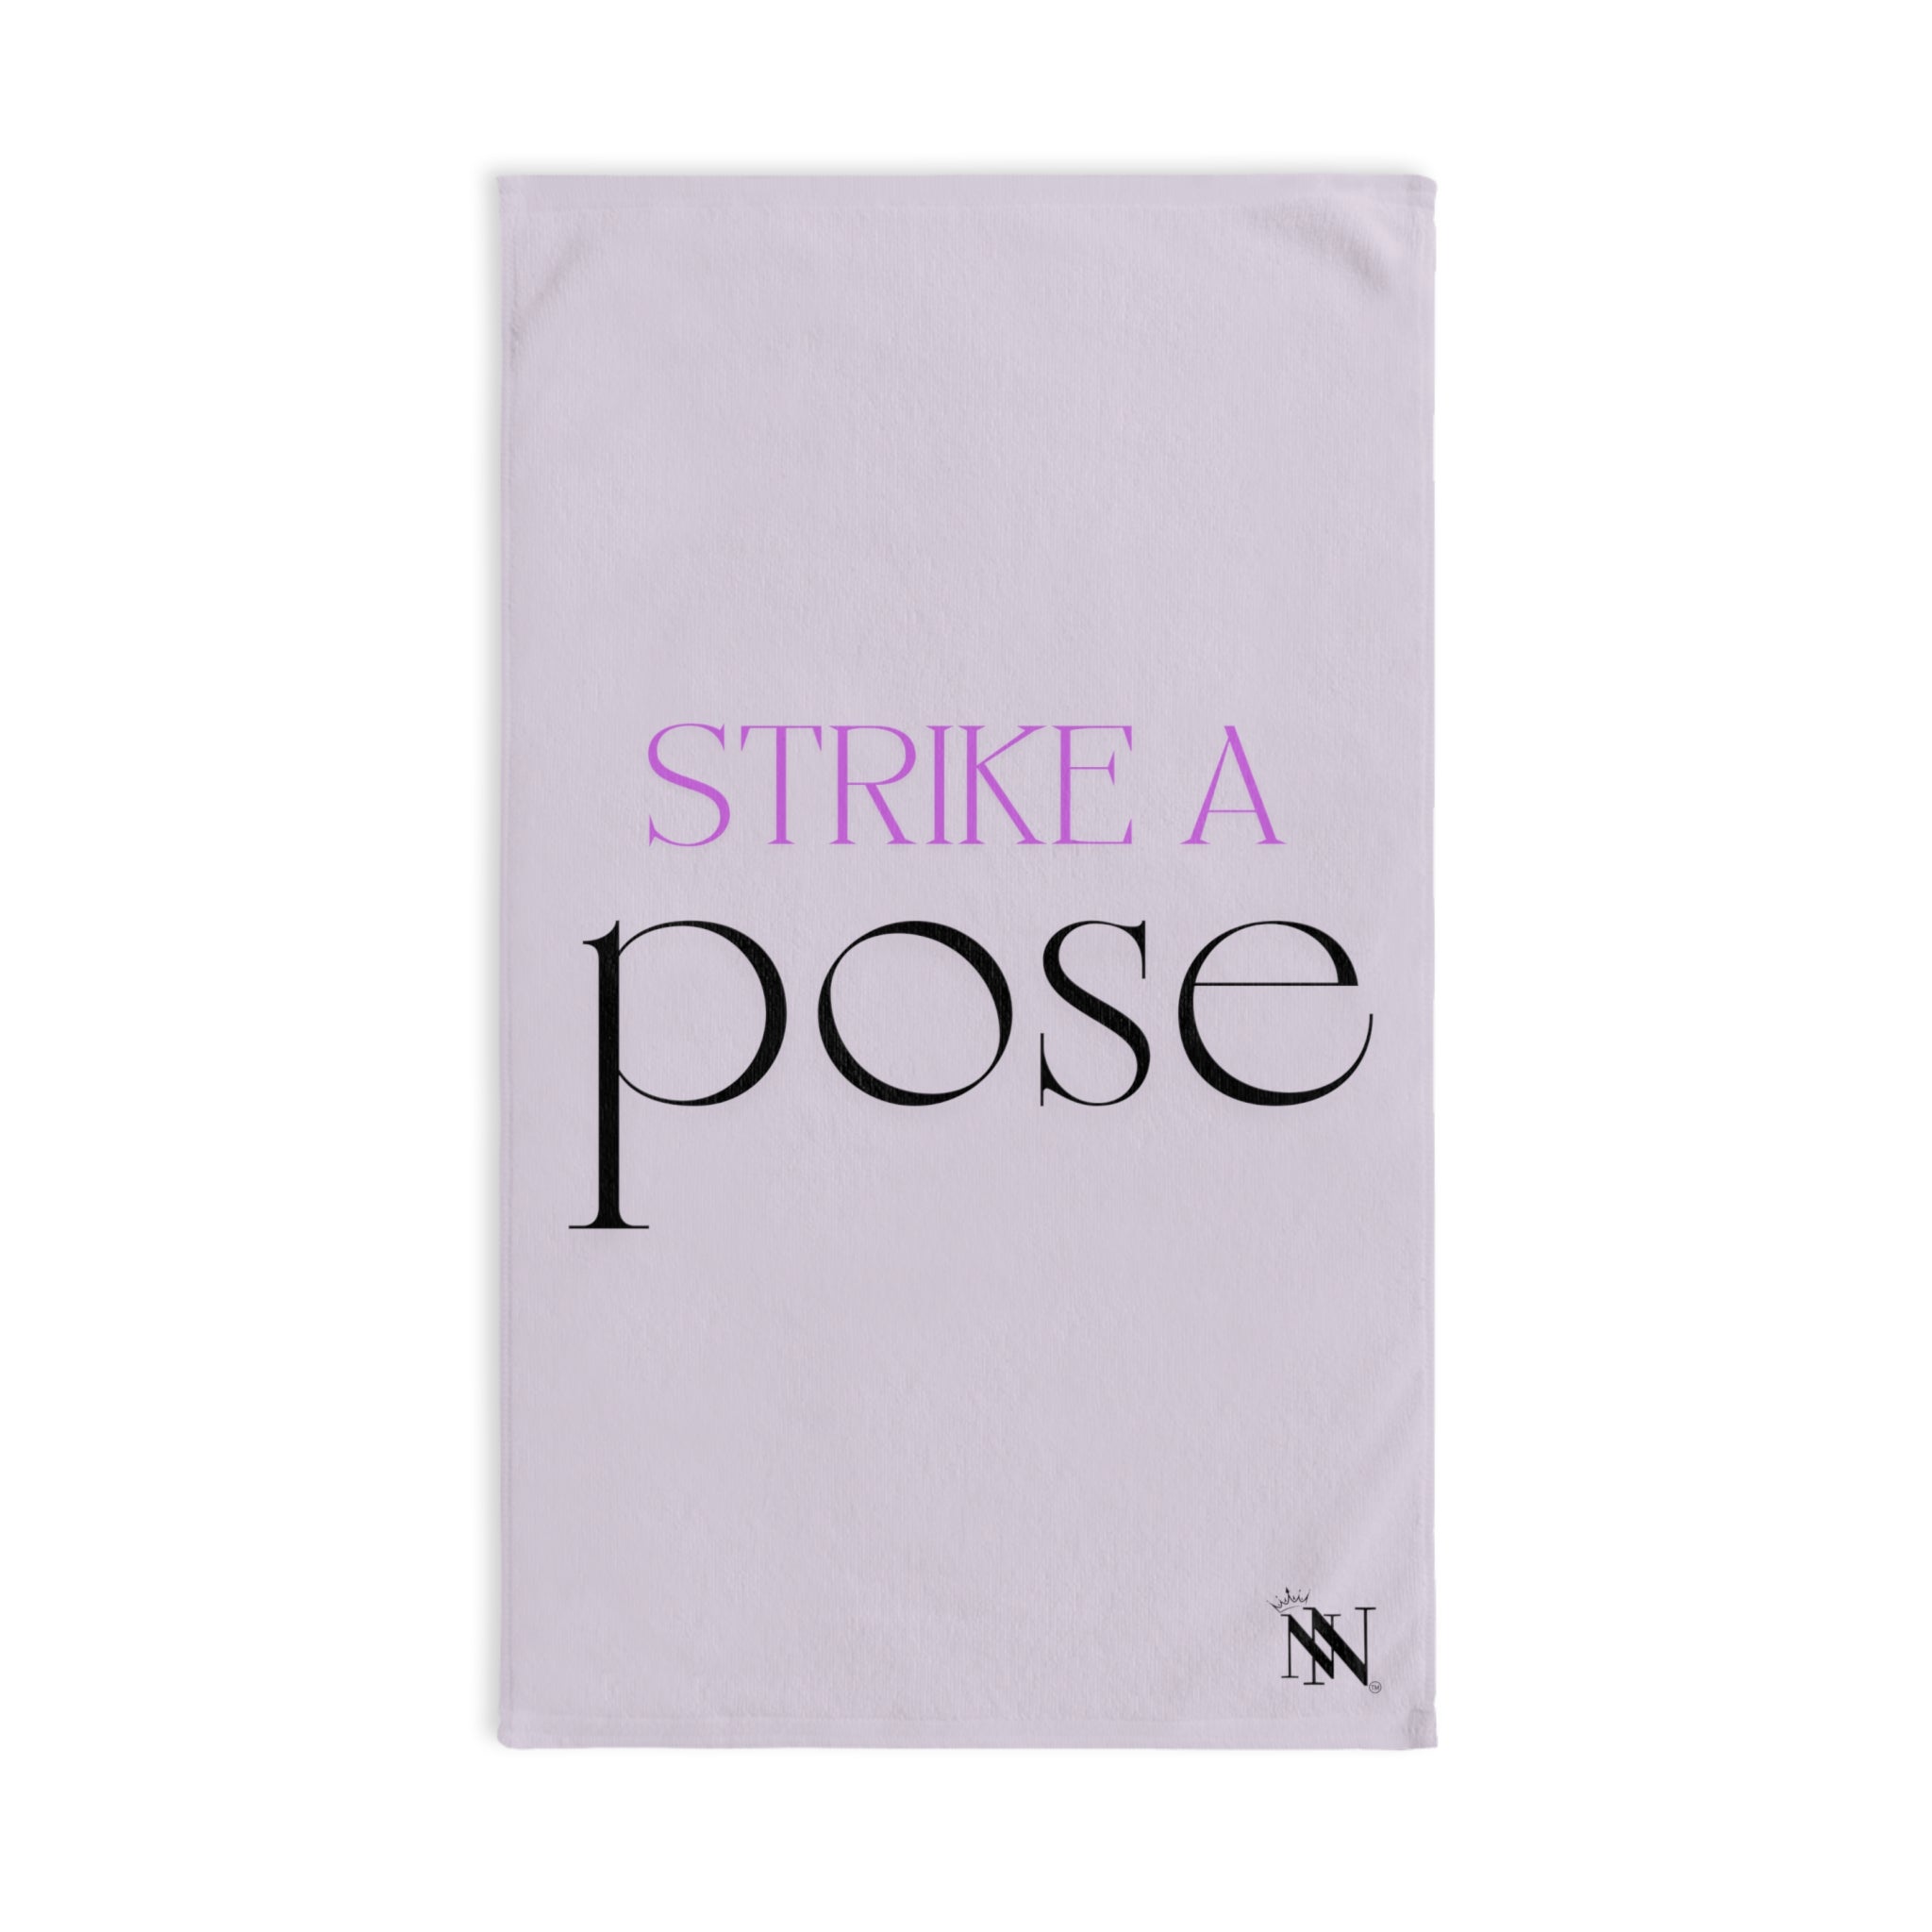 Strike a pose sex towel